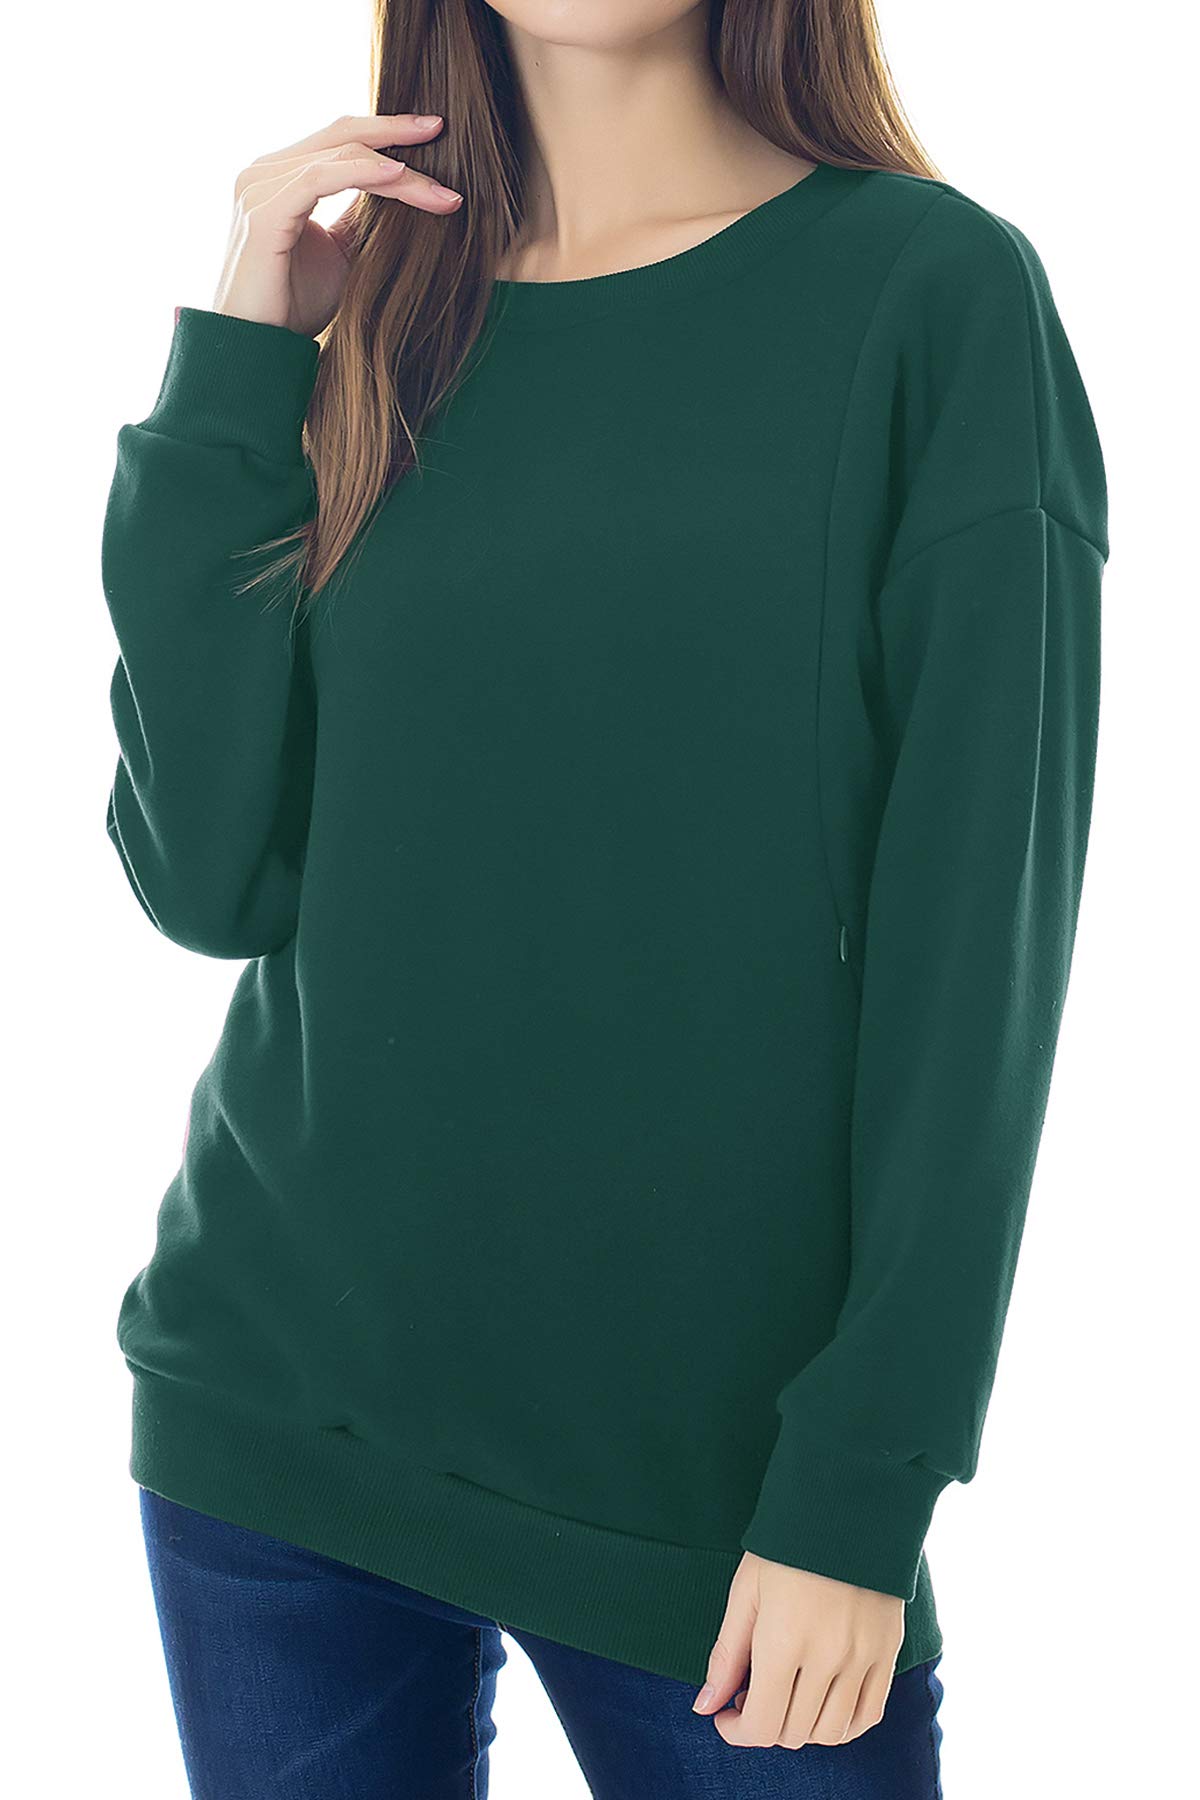 Smallshow Pflege Sweatshirt Langarm T-Shirt Bluse Stillen Pullover Tops Stillshirt Emerald Green M